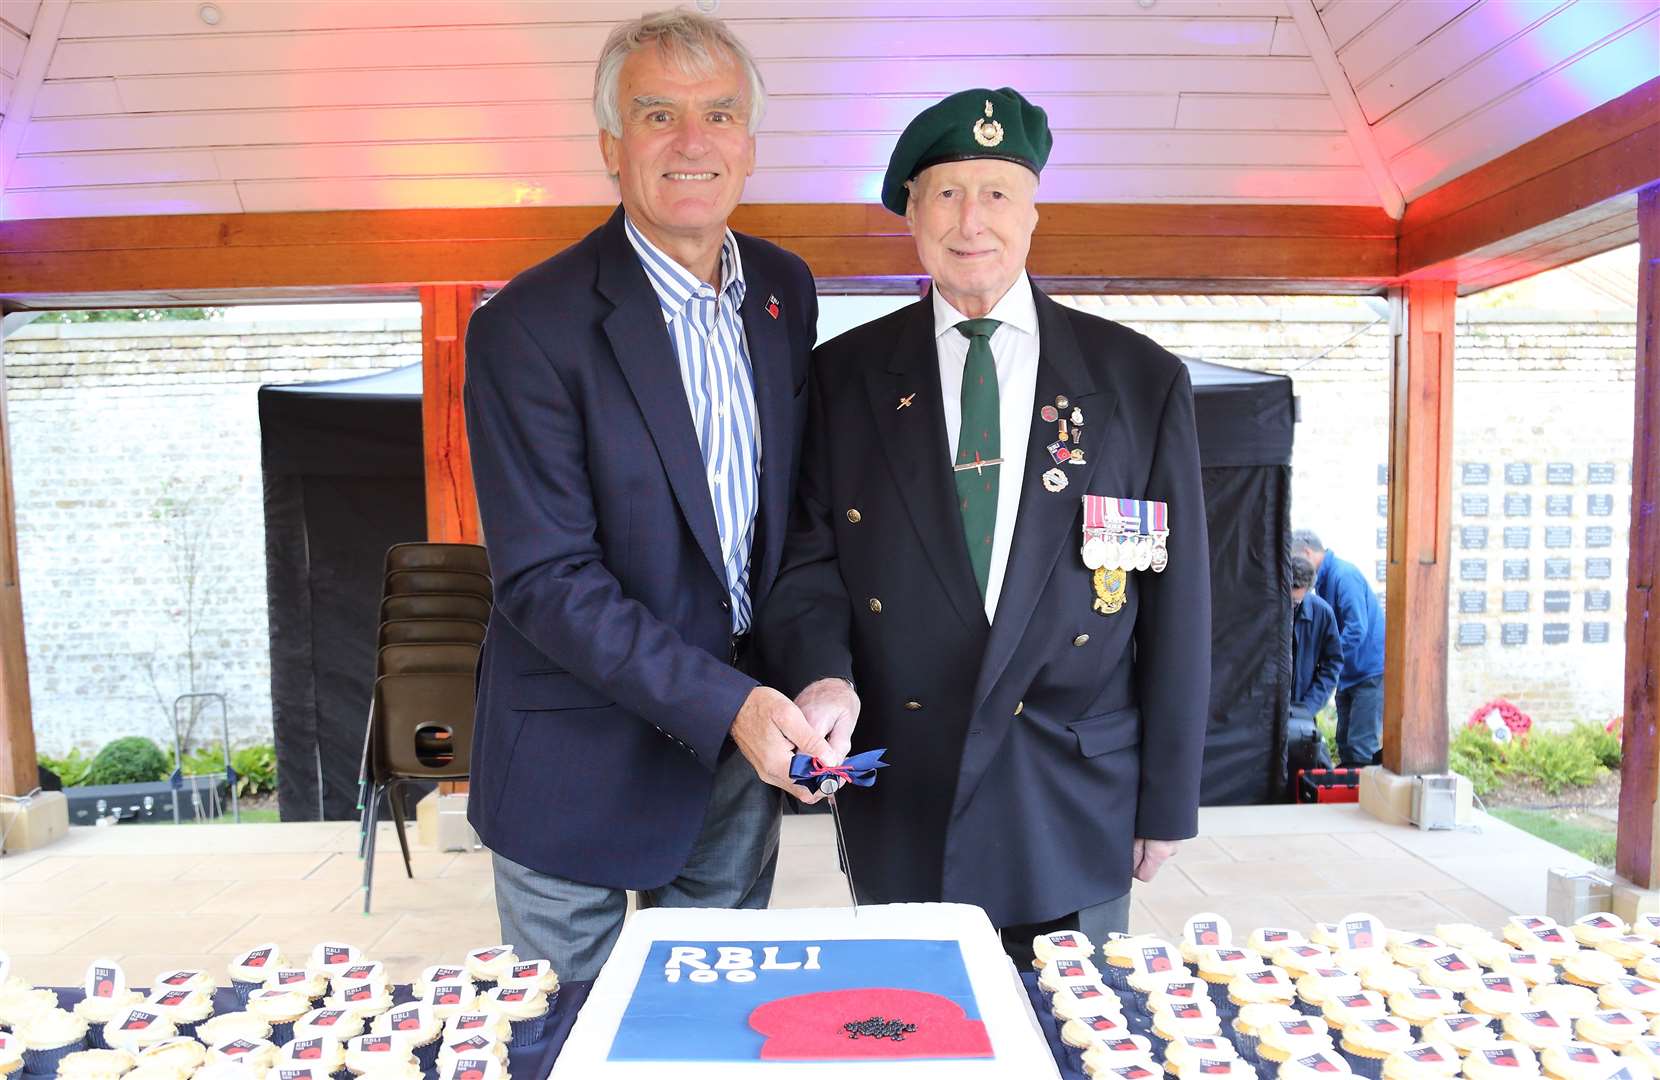 RBLI chairman Stephen Kingsman and Veteran George Bradford at the RBLI 100 birhtday celebrations